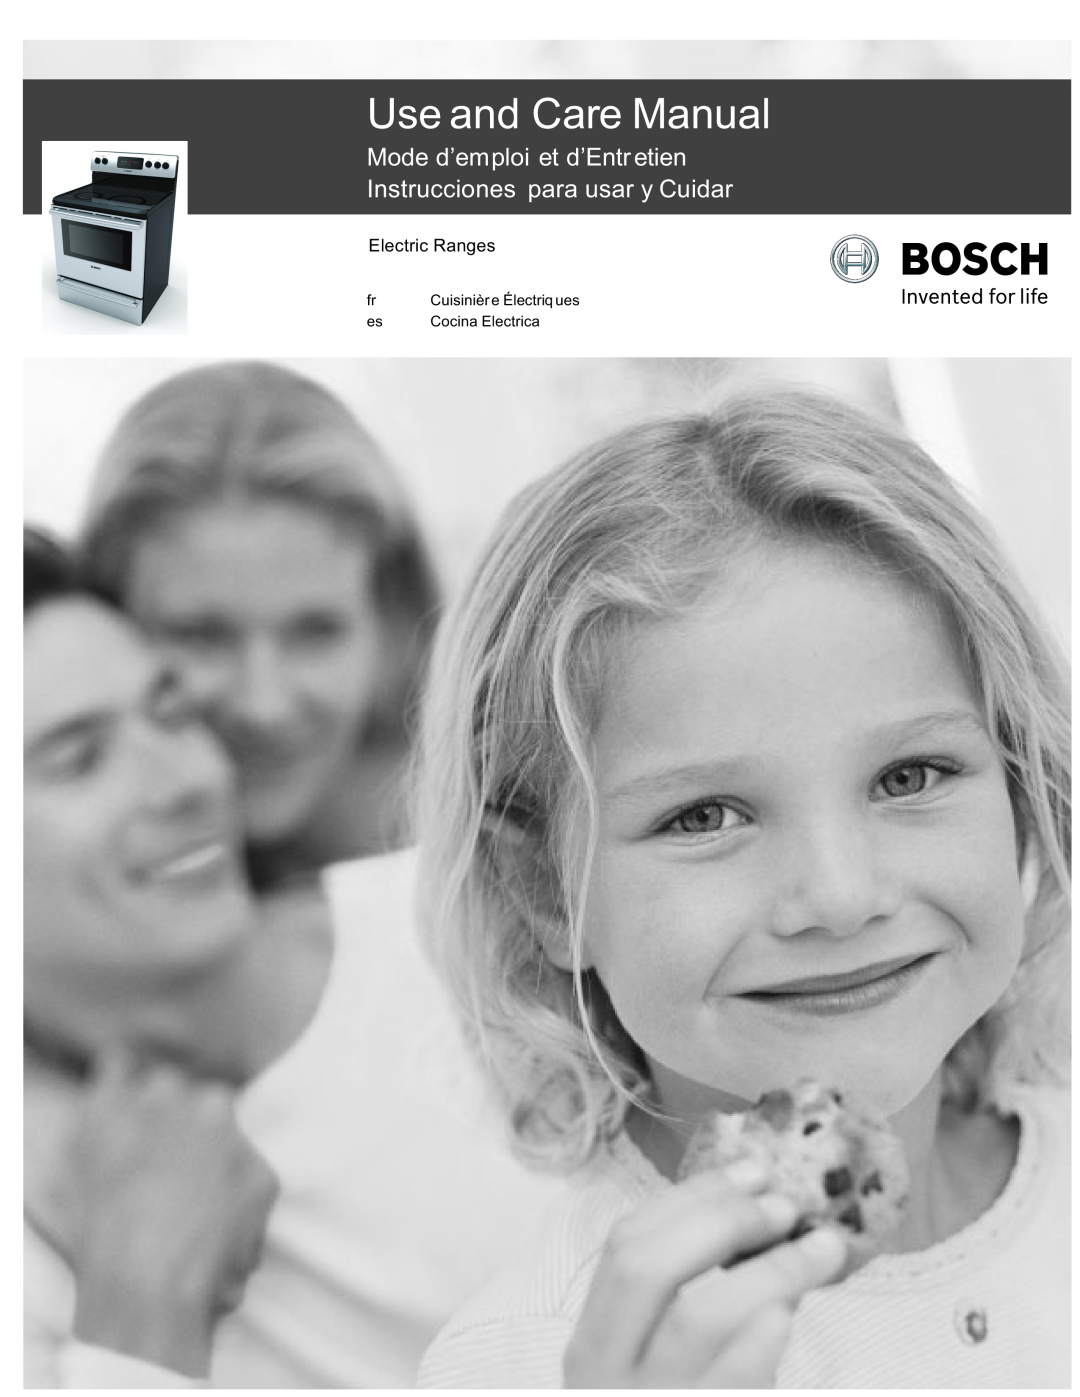 Bosch Appliances HES3063U manual Use and Care Manual, Mode d’emploi et d’Entr etien Instrucciones para usar y Cuidar 